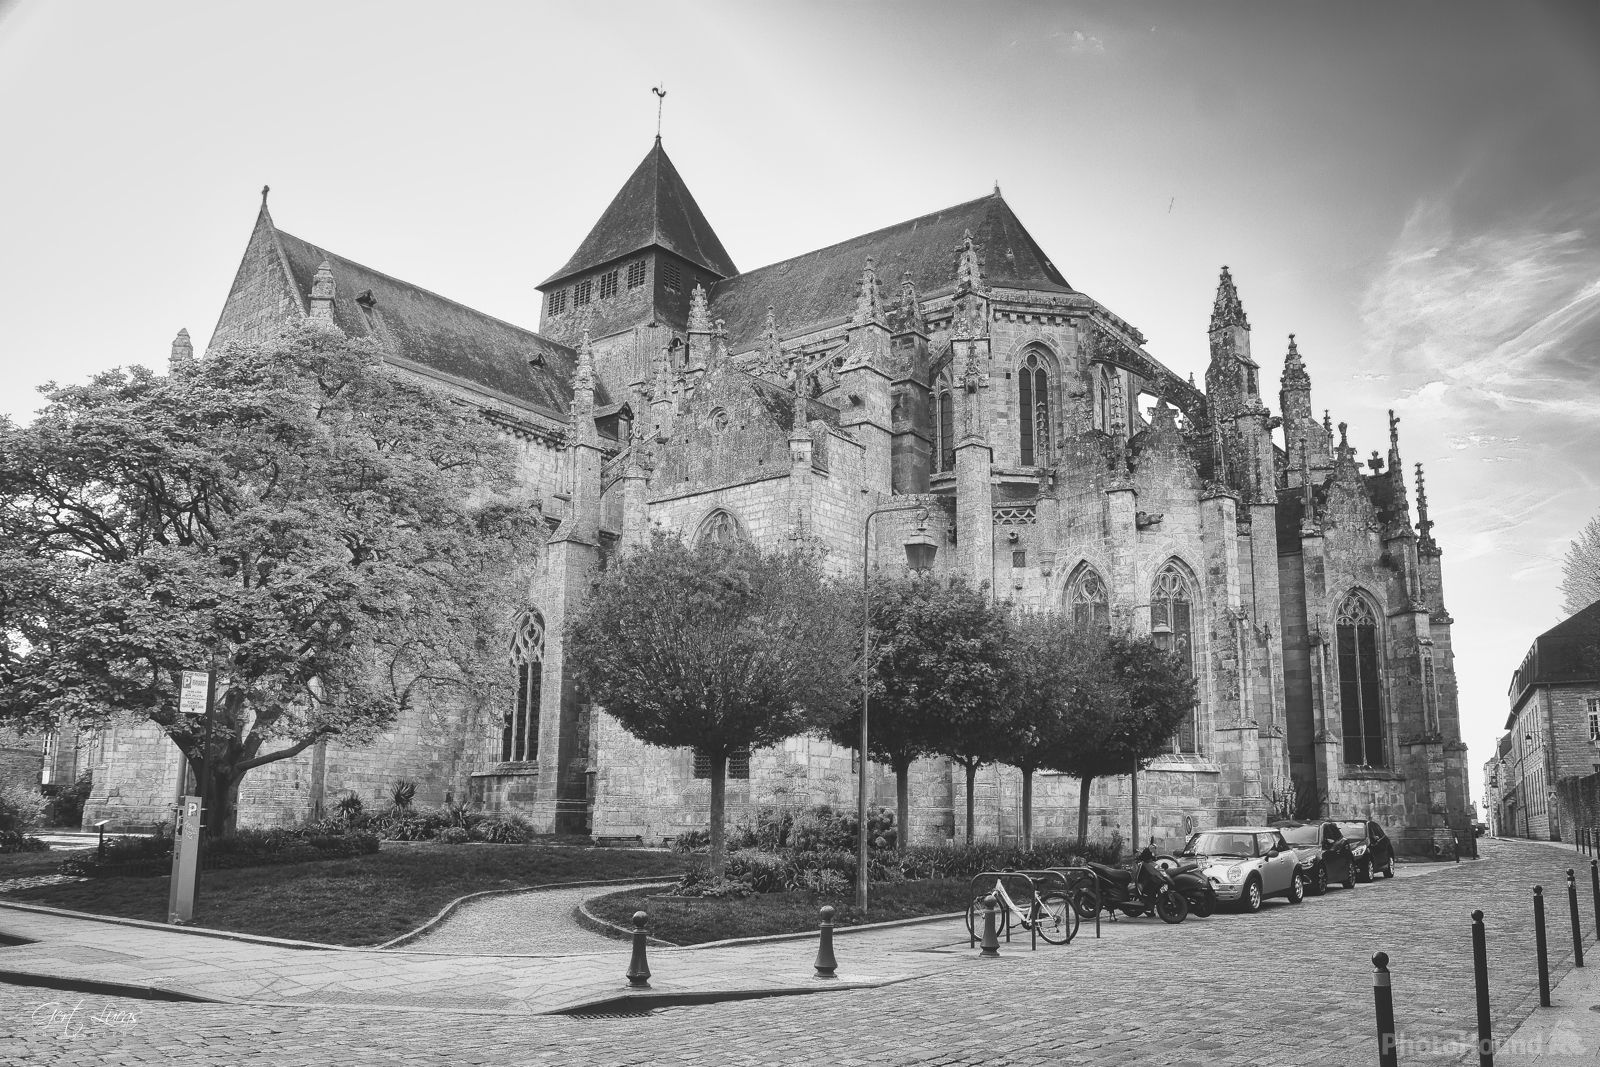 Image of Saint malo Church, Dinan, France by Gert Lucas